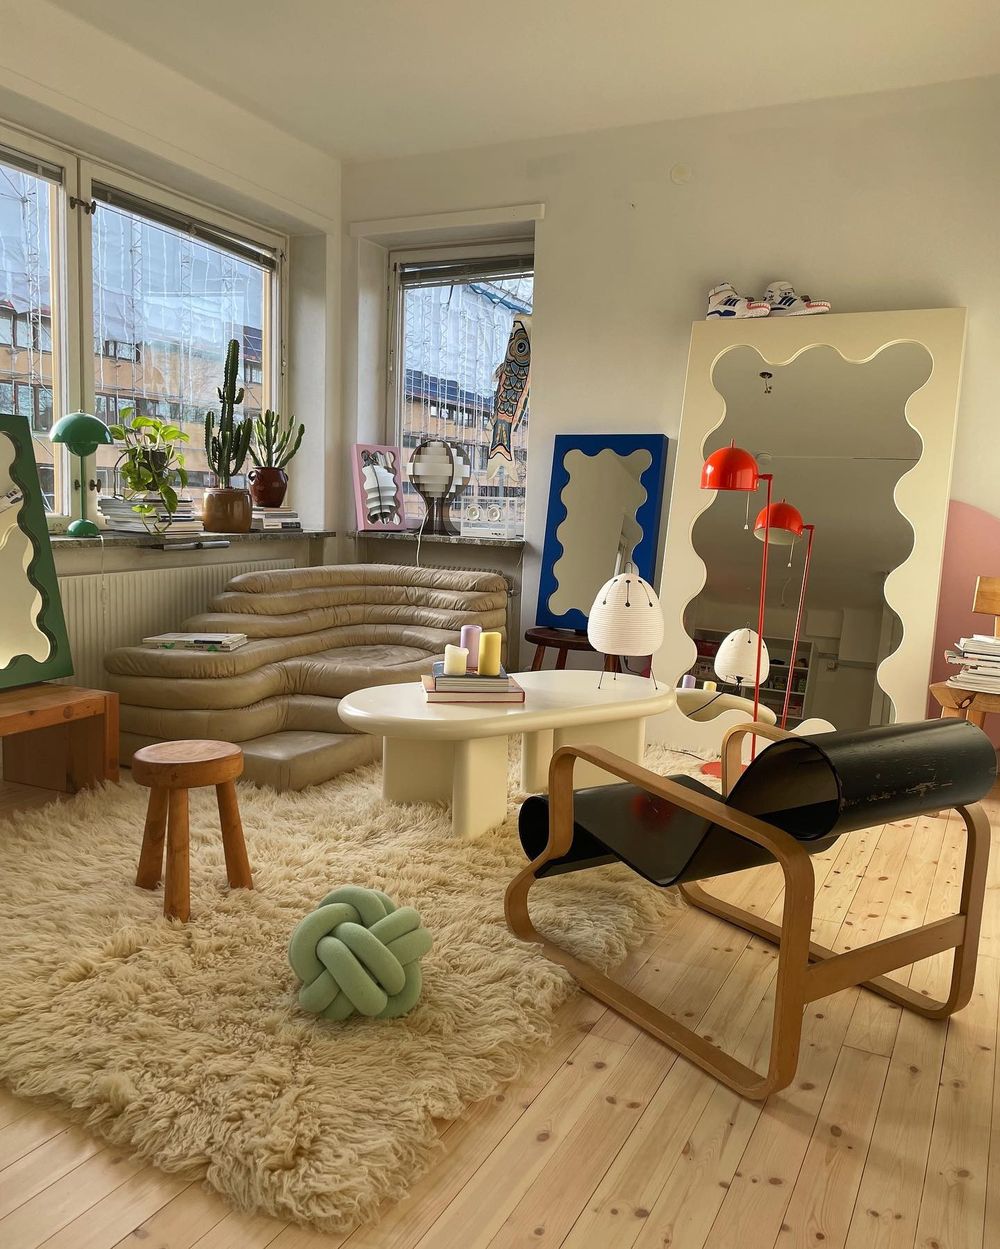 Postmodern living room decor via @gustafwestman